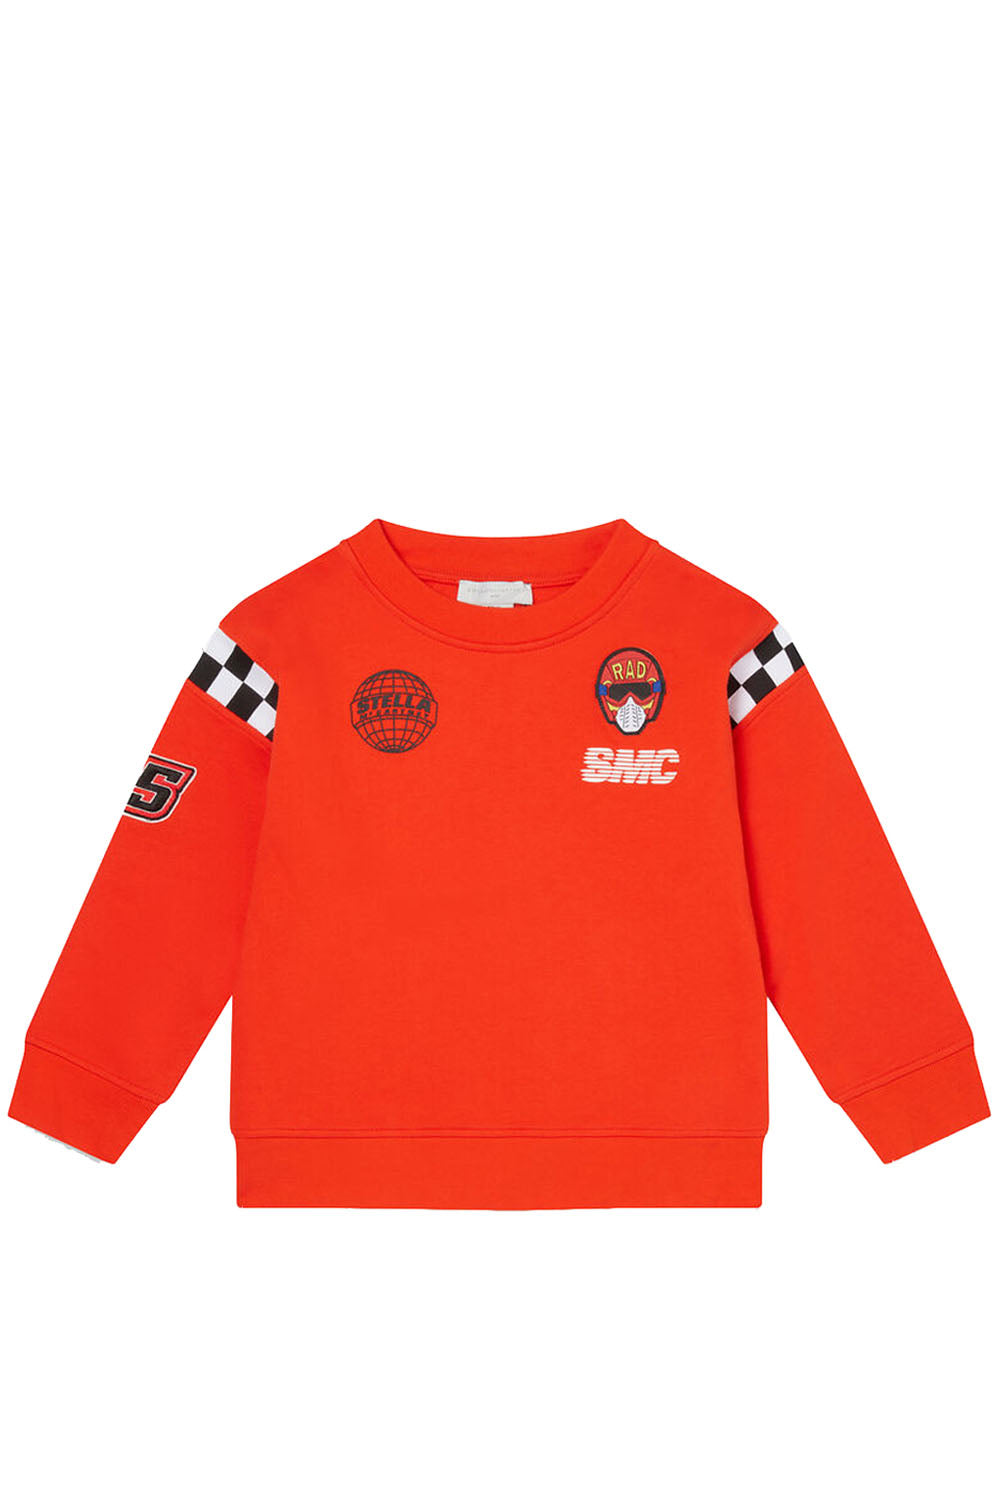 Oversize Sweatshirt Motorcross & Badges for Boys - Maison7